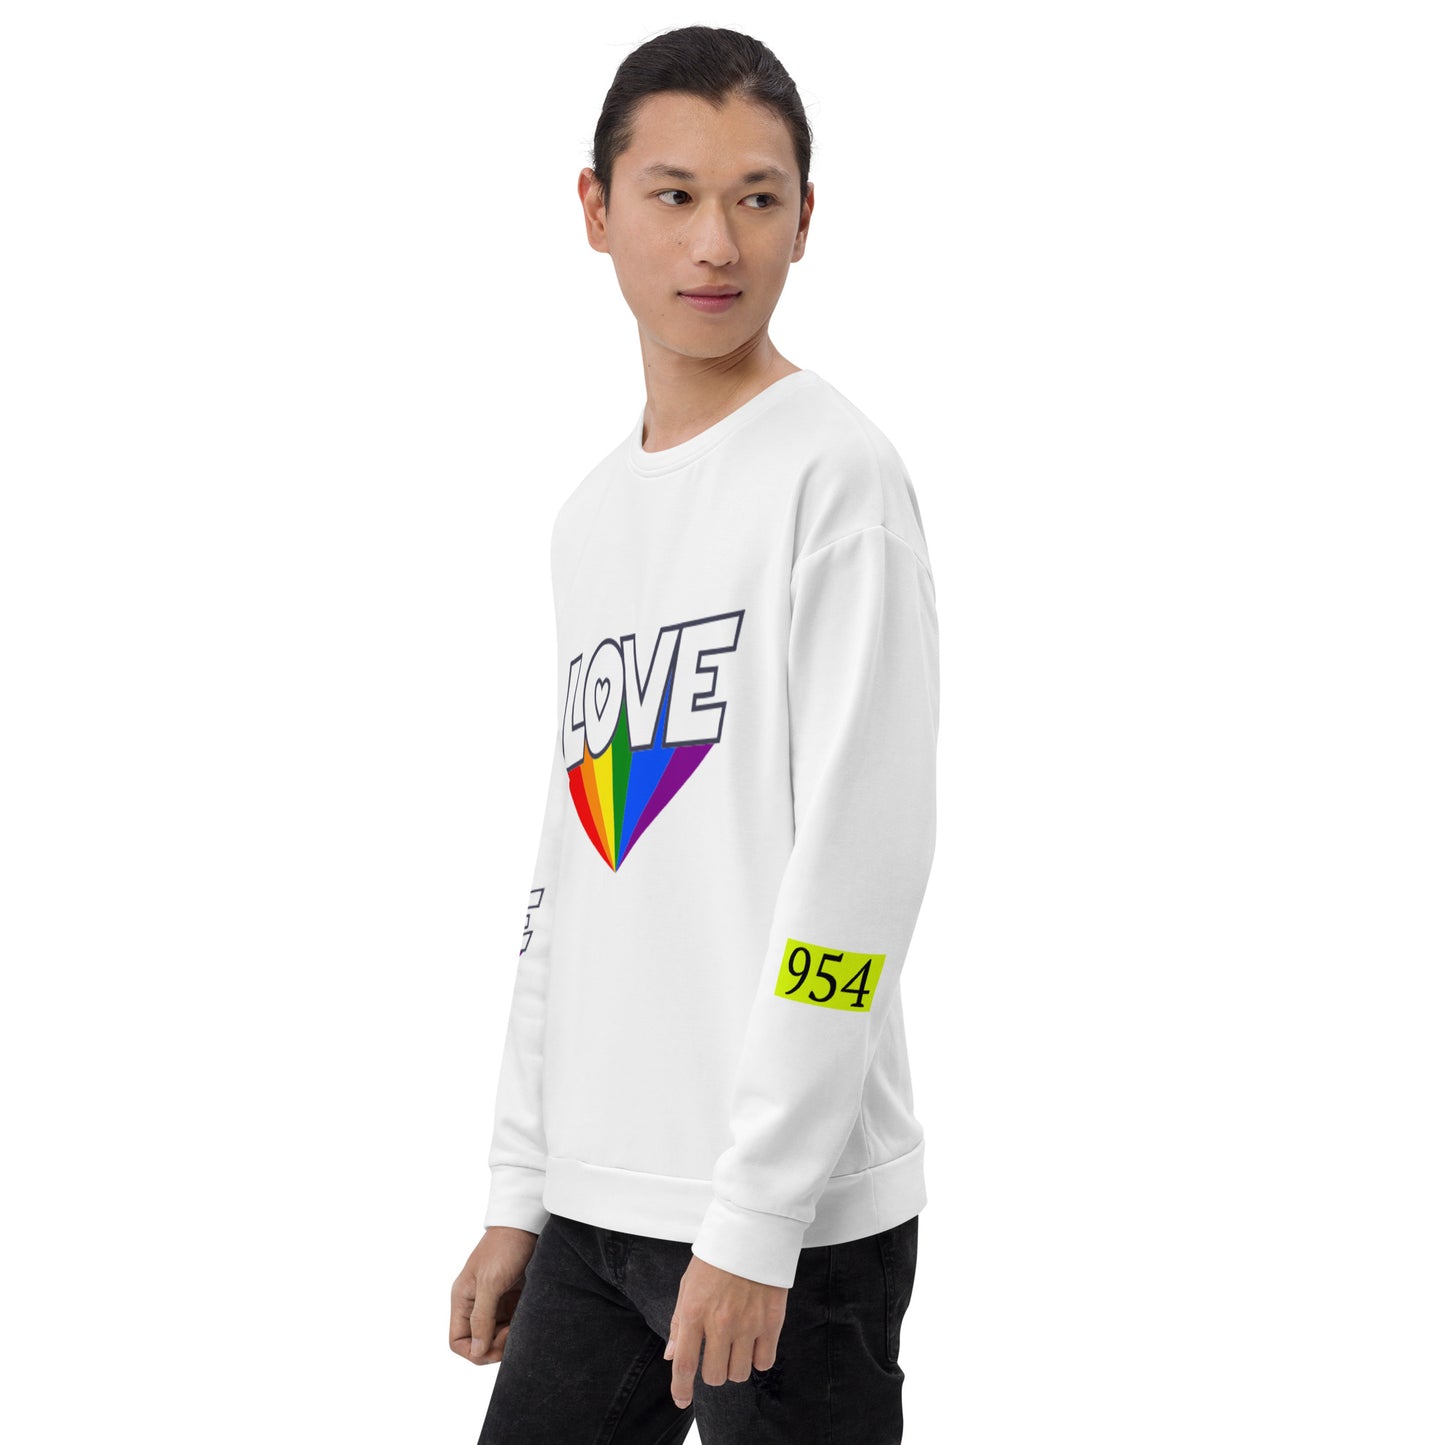 LOVE - Unisex Sweatshirt